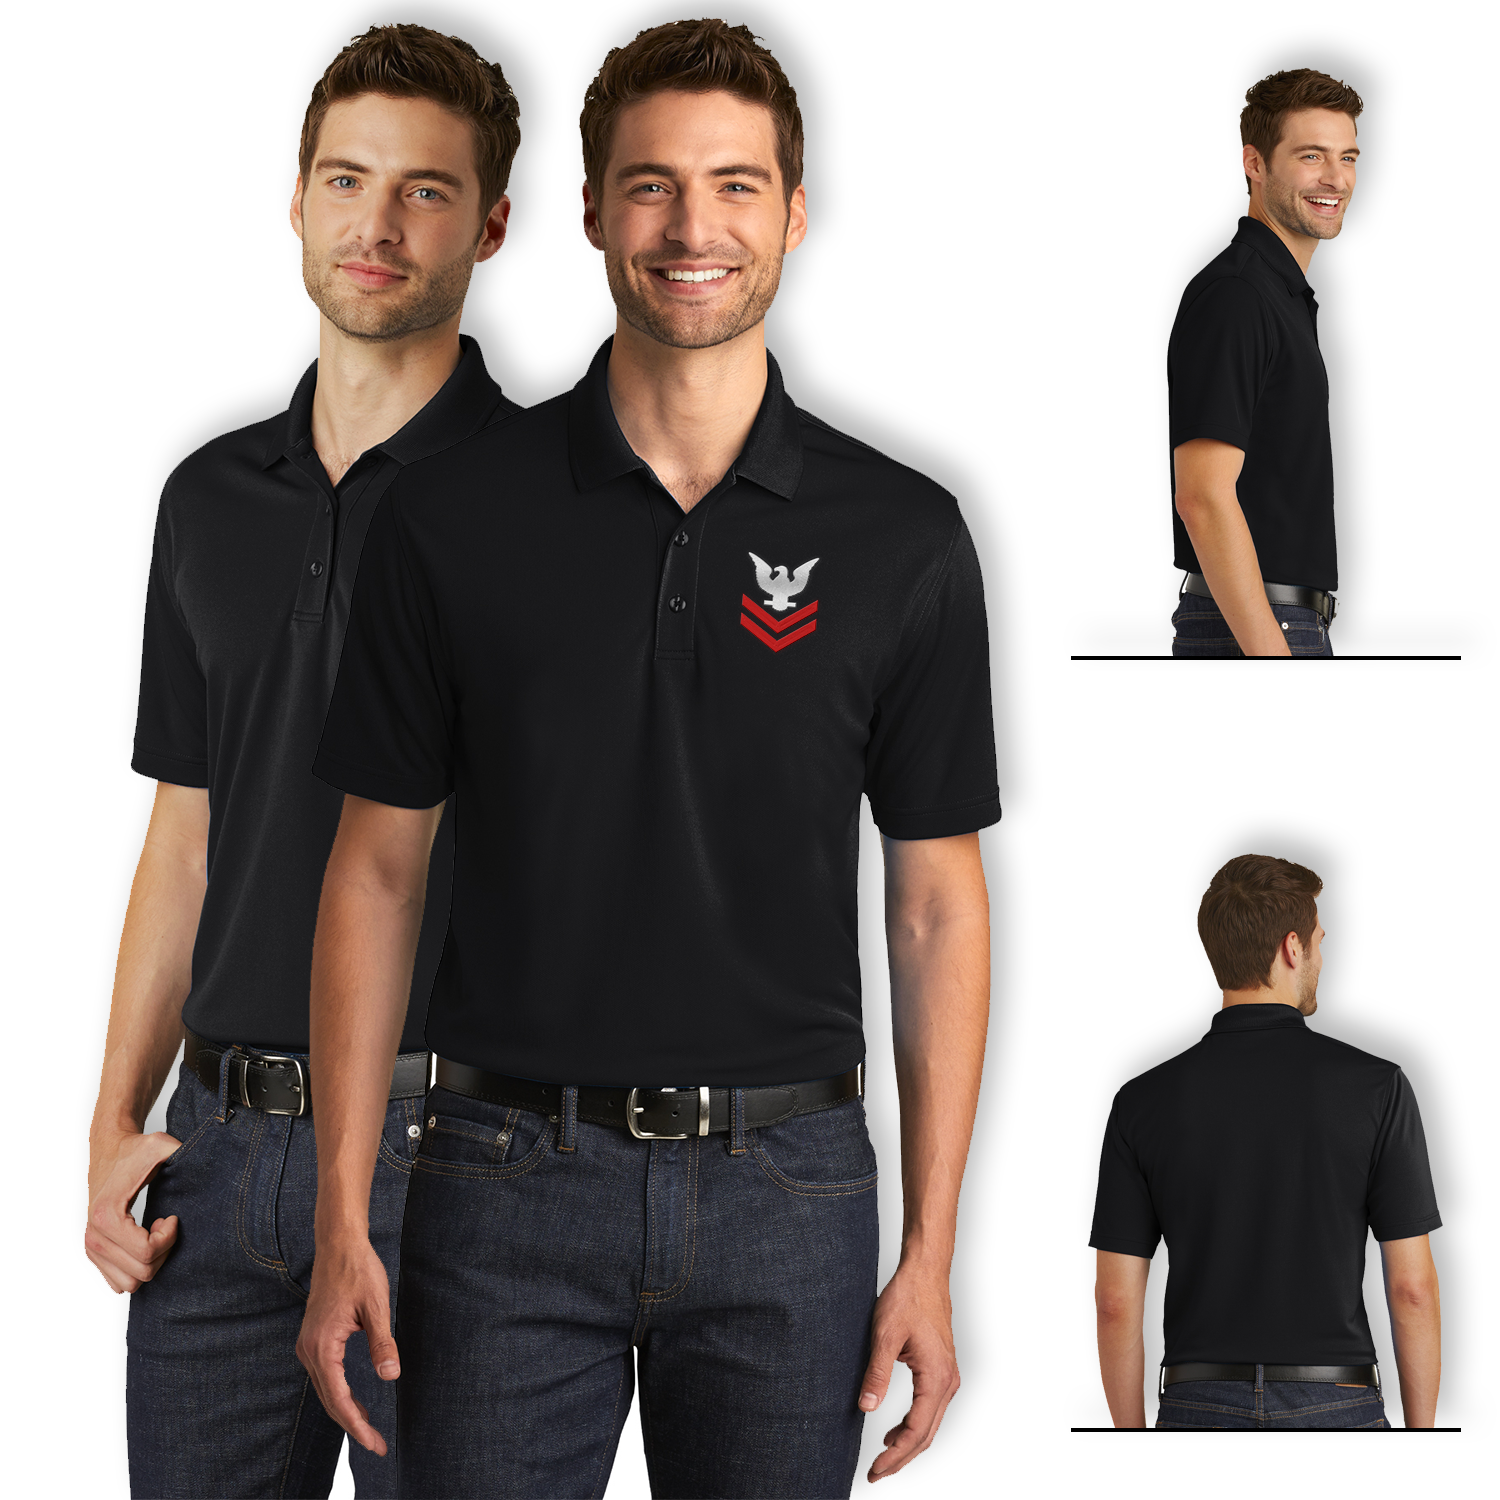 Custom US Navy Ranks/Insignia Print On Left Chest Polo Shirt